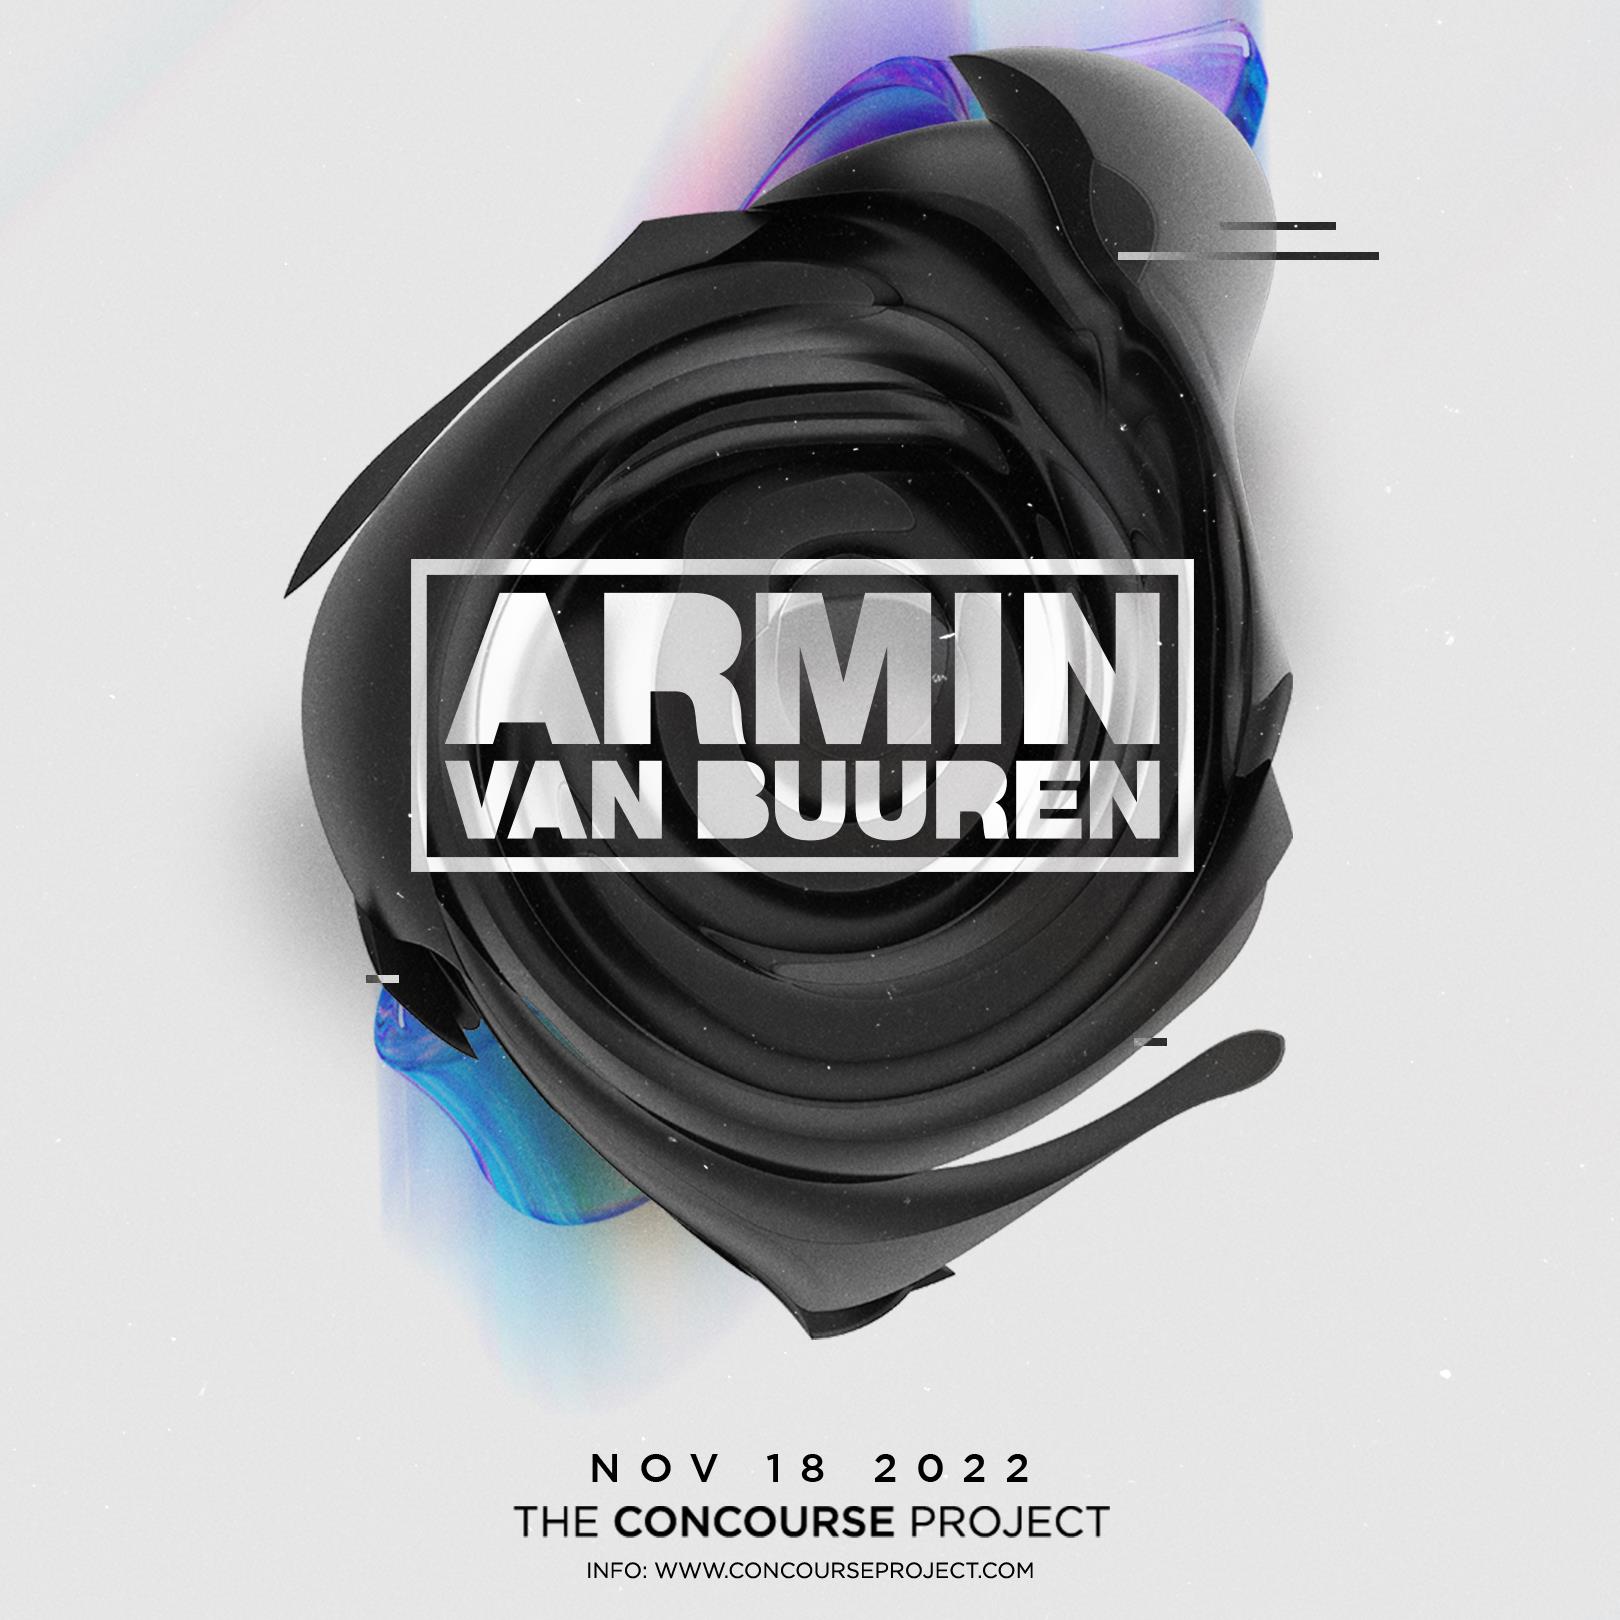 Armin van Buuren at The Concourse Project